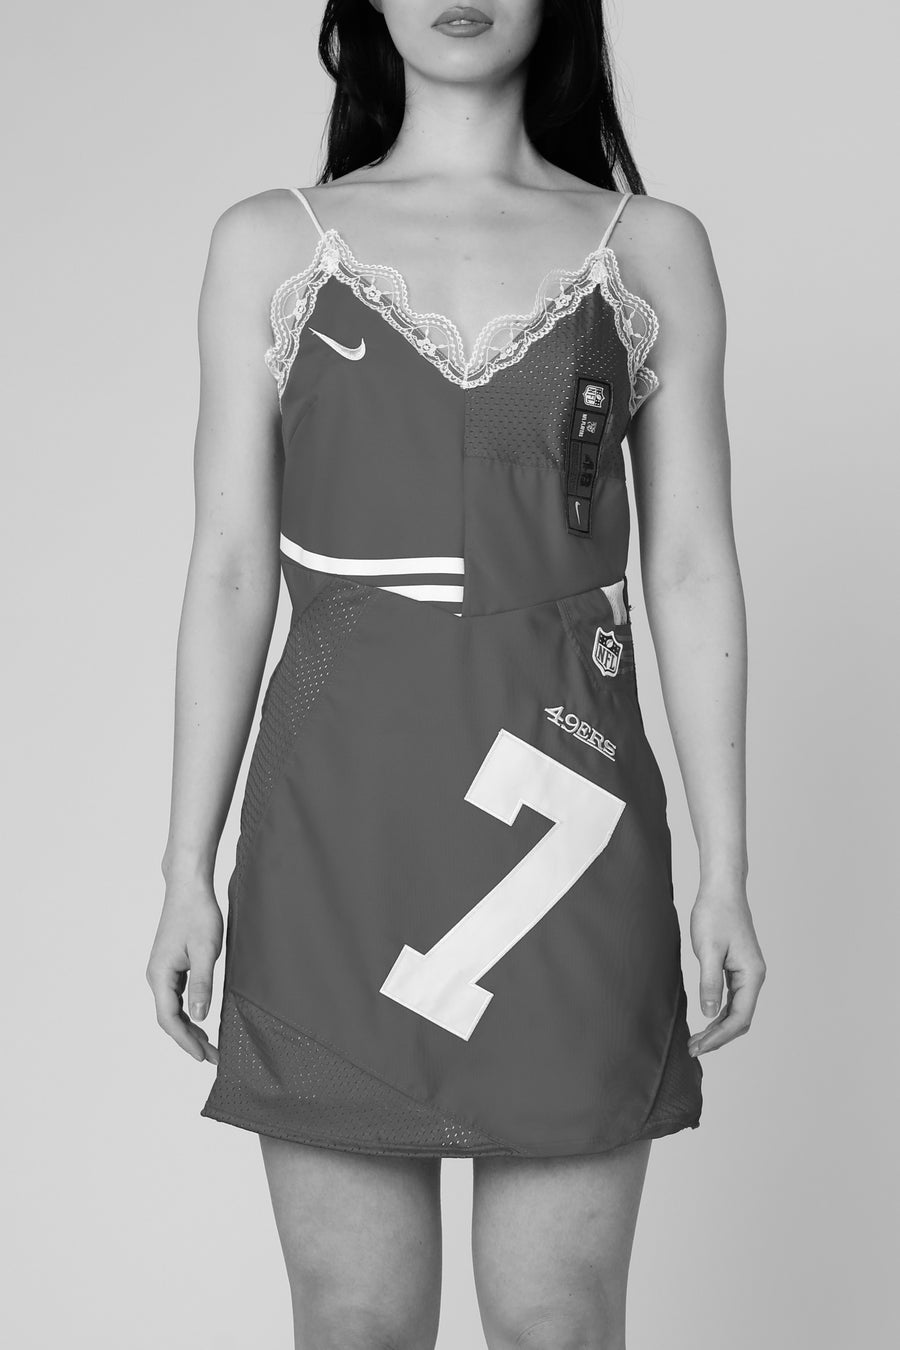 Rework NCAA Lace Dress - M